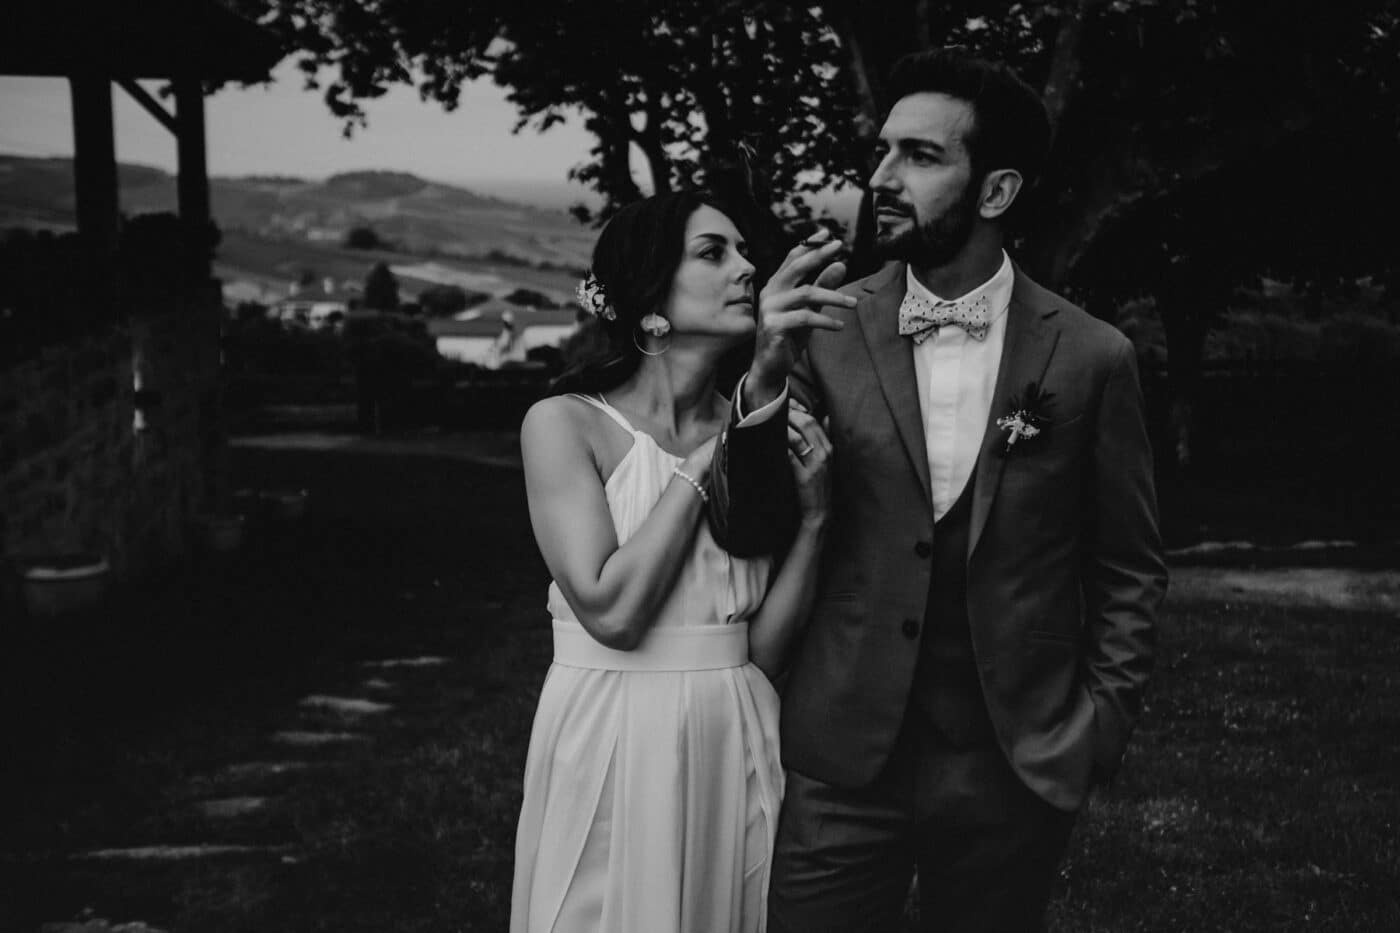 mariage photographe lyon rhone alpes suisse www.lobjectifdubarbu.com